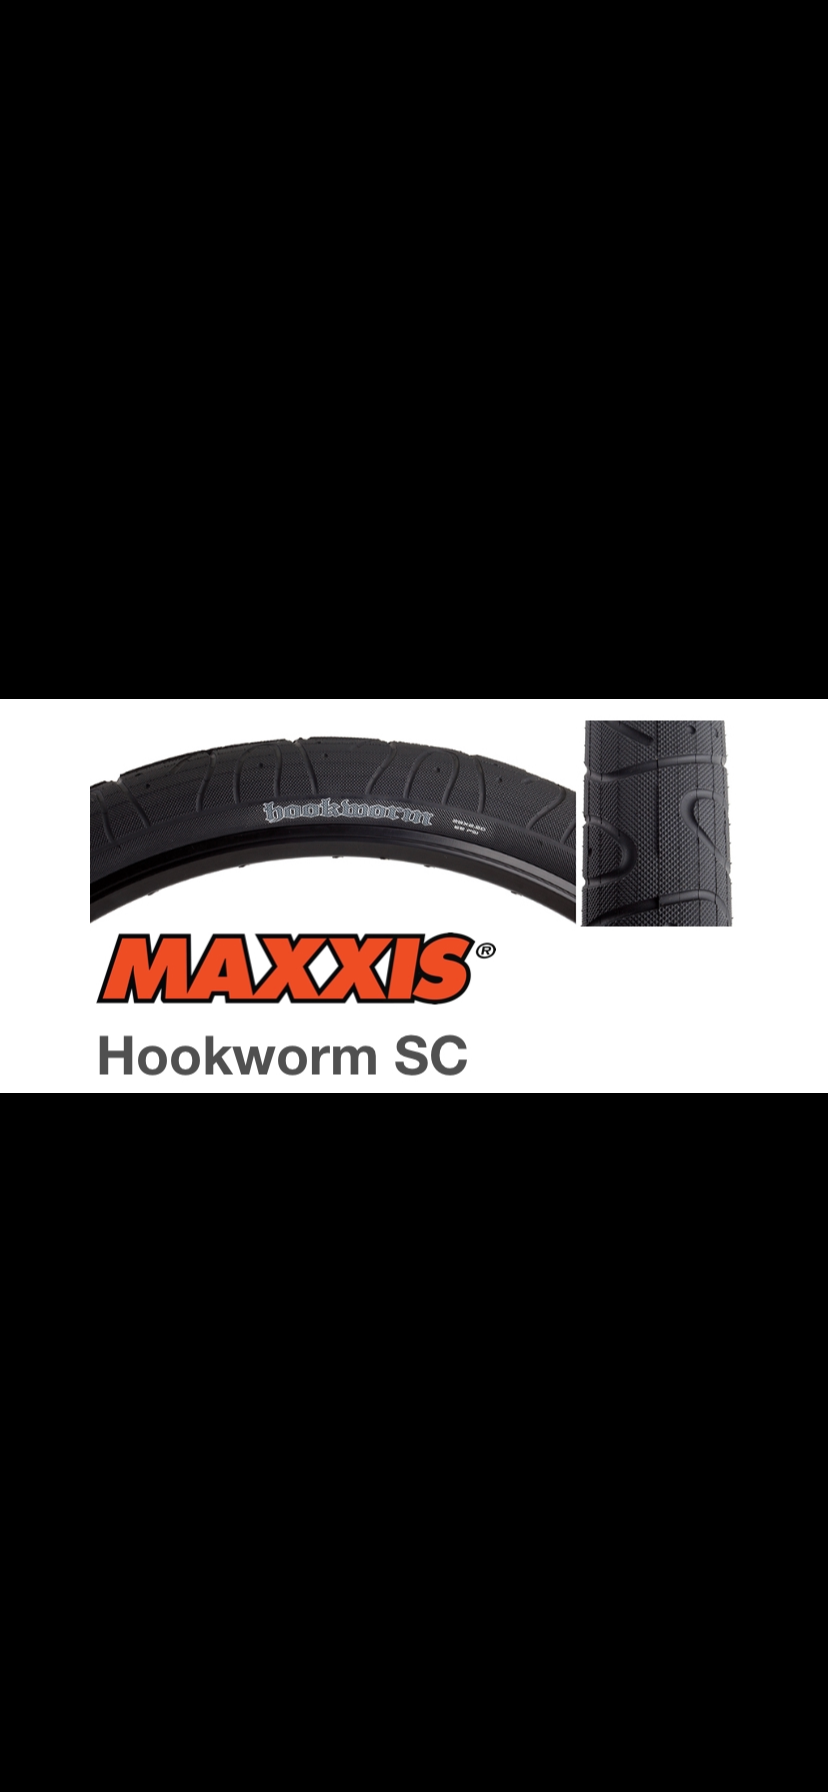 MAXXIS hookworm 29 tire